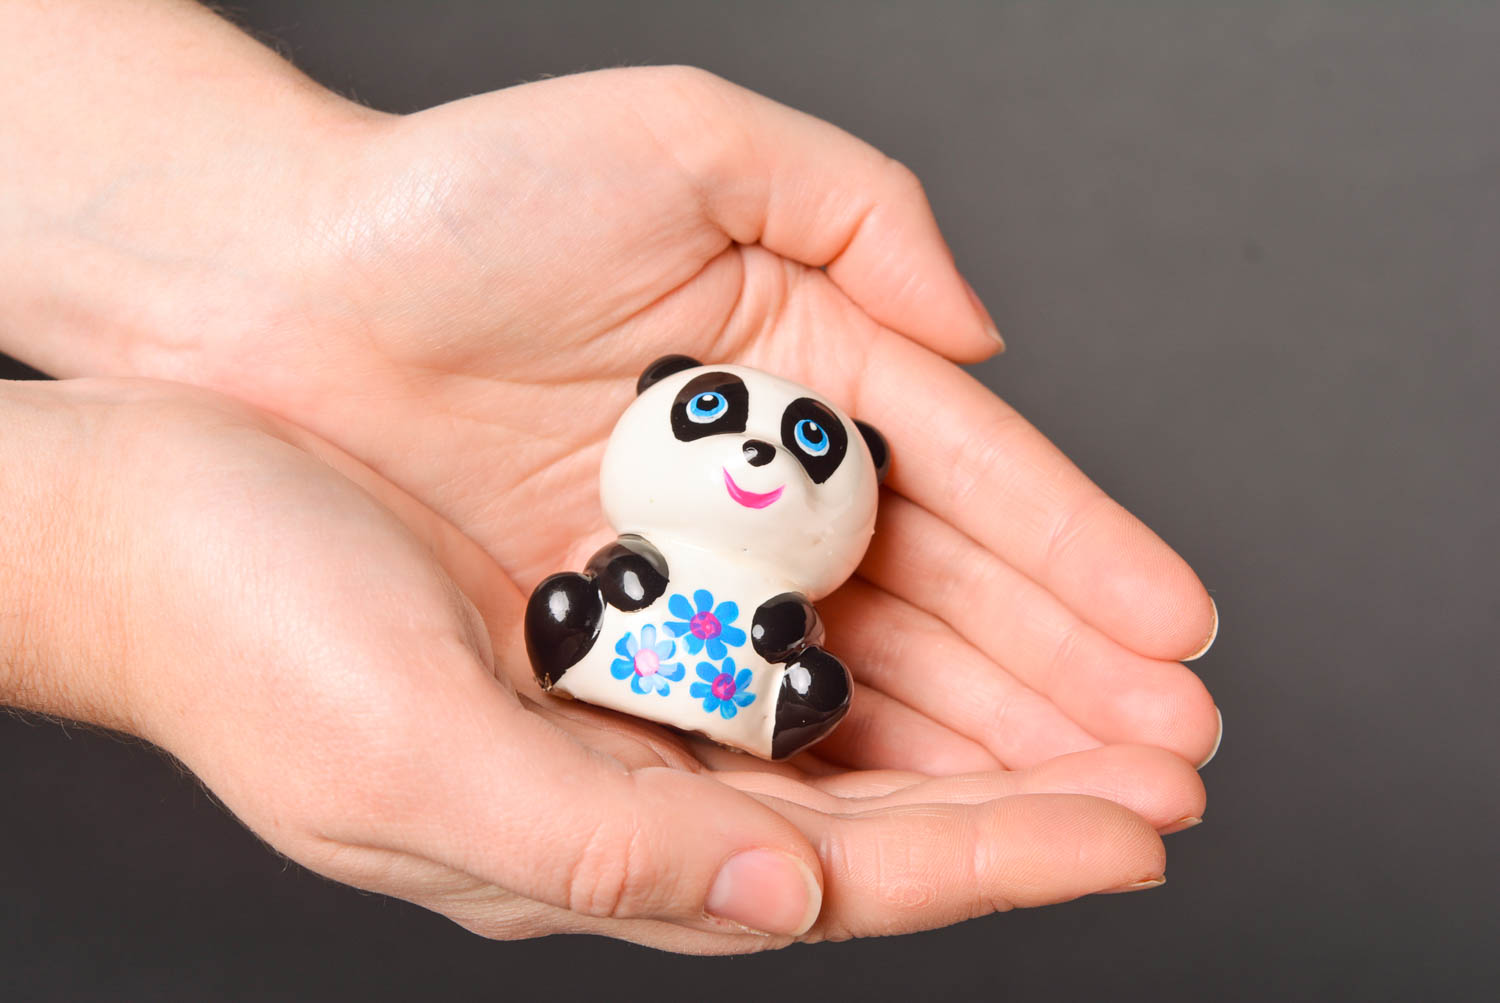 Handgefertigt Gips Figur Deko Wohnzimmer kreative Geschenkidee Panda foto 2